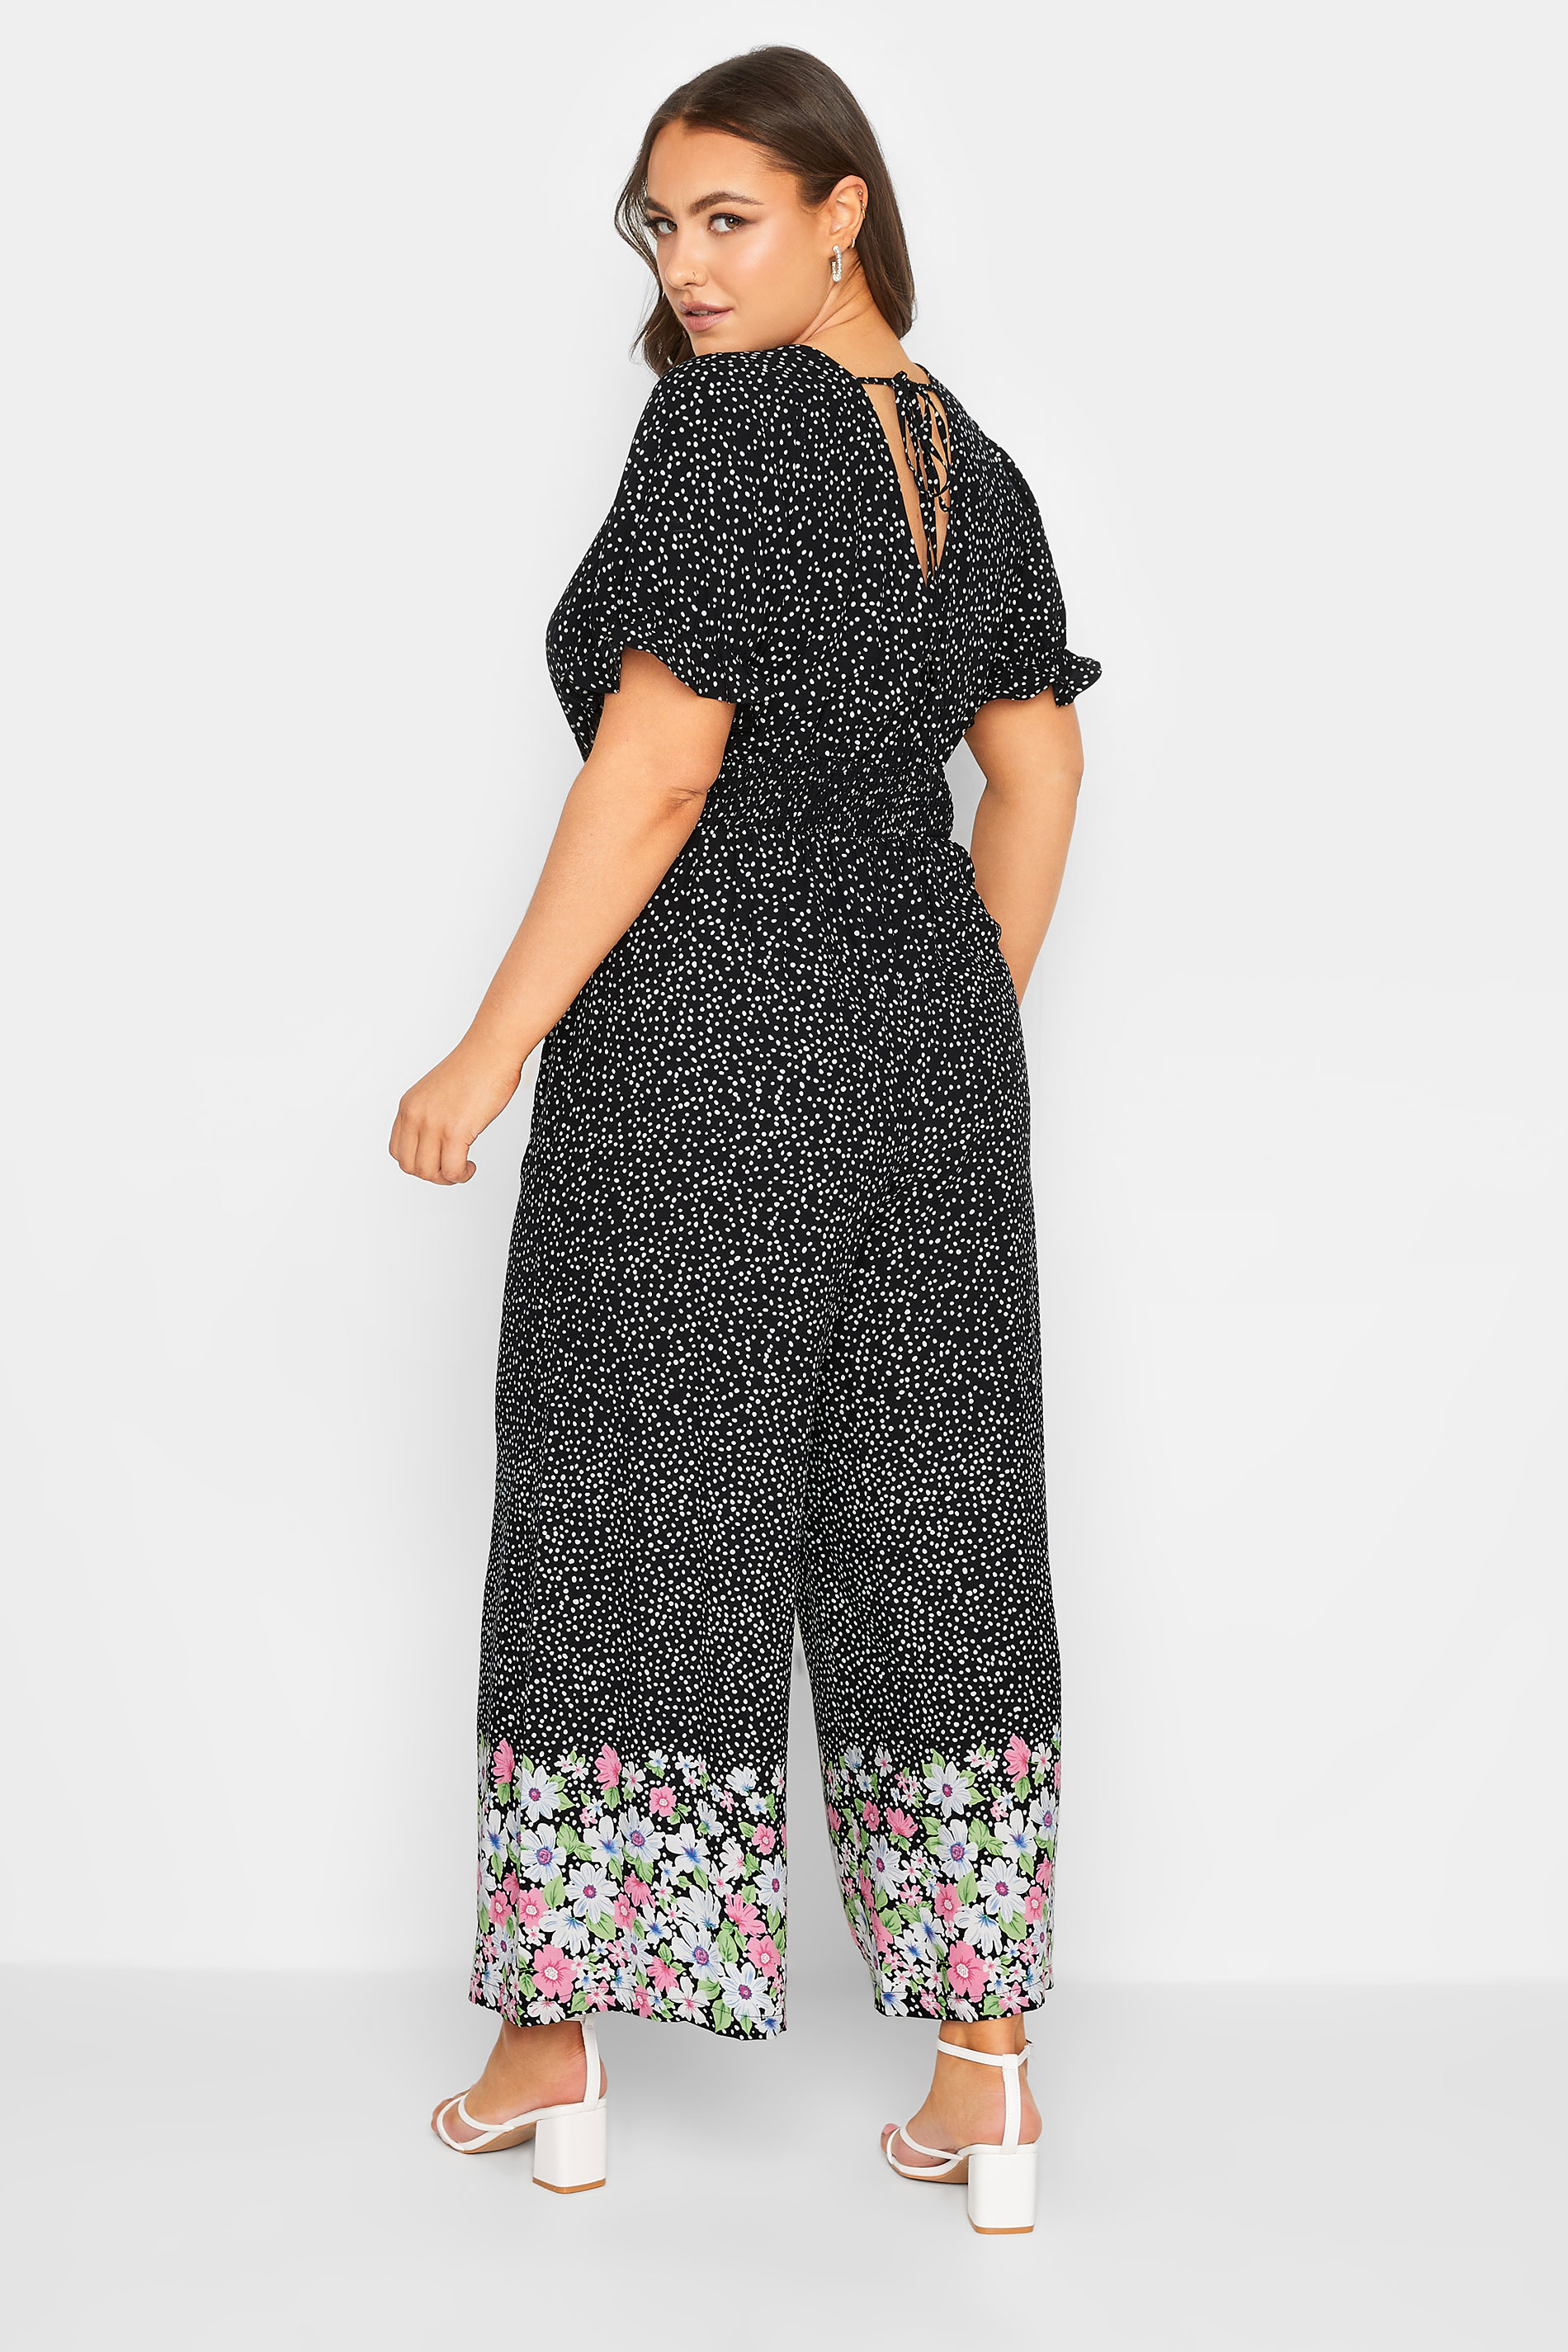 YOURS Plus Size Black Floral Border Print Jumpsuit | Yours Clothing 3